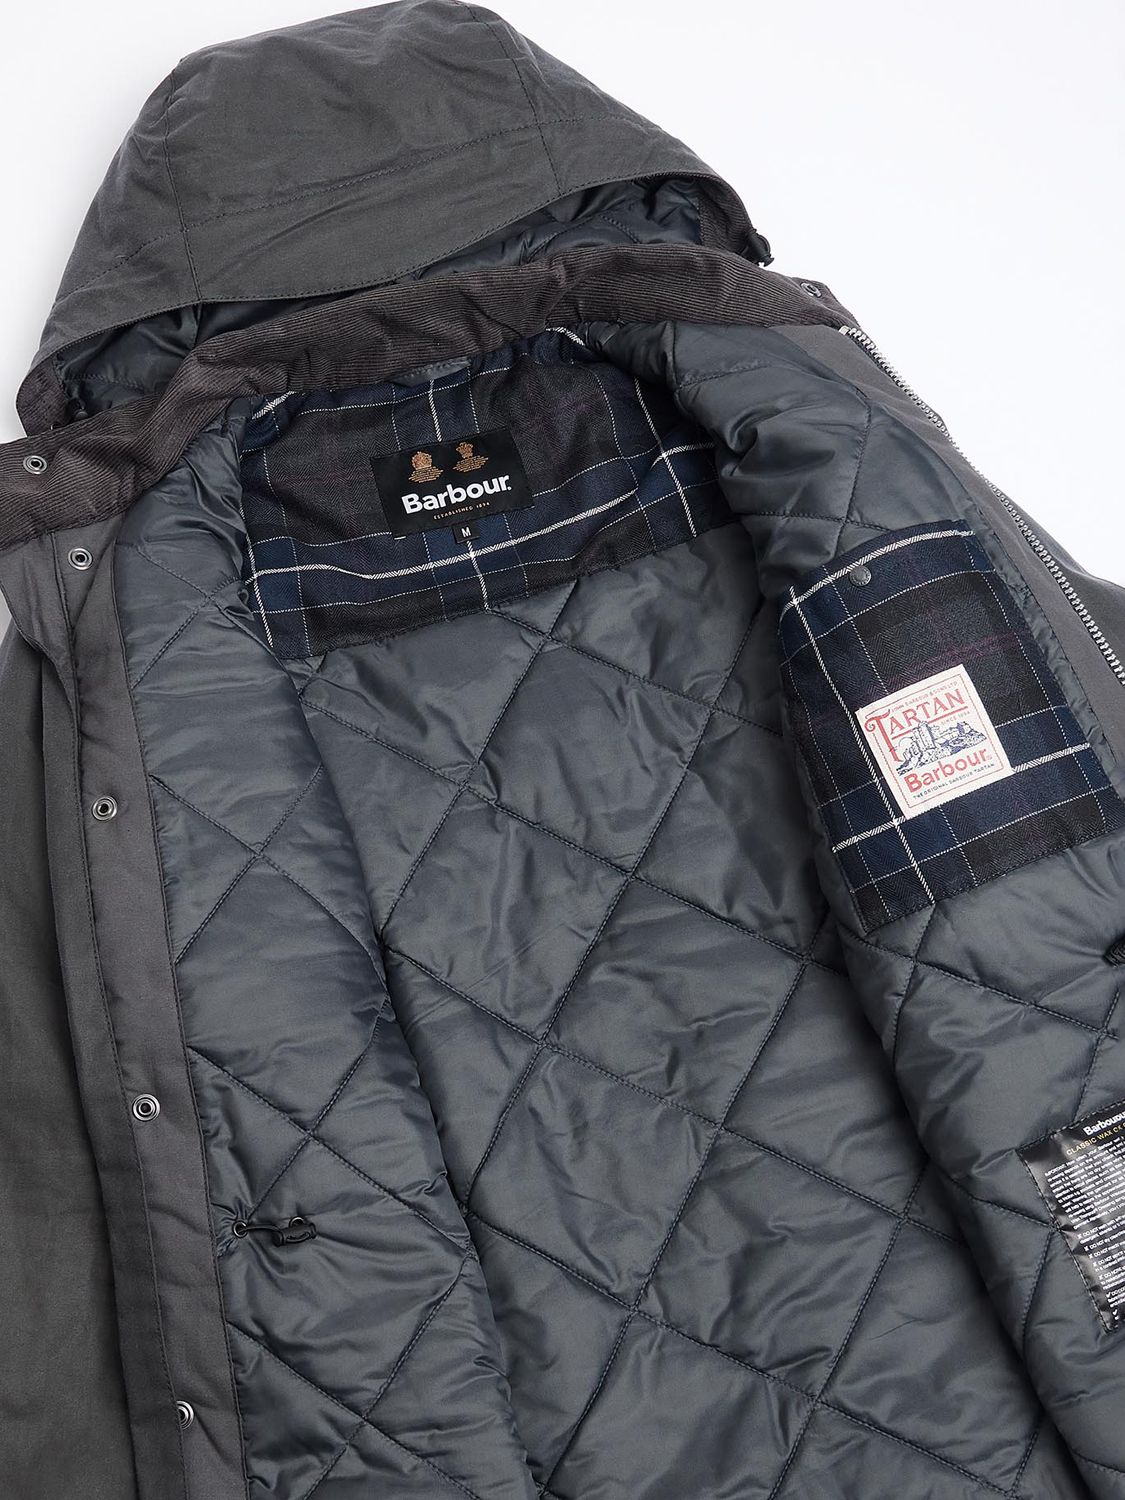 Barbour Winter Sapper Wax Jacket, Grey/Black Slate at John Lewis & Partners